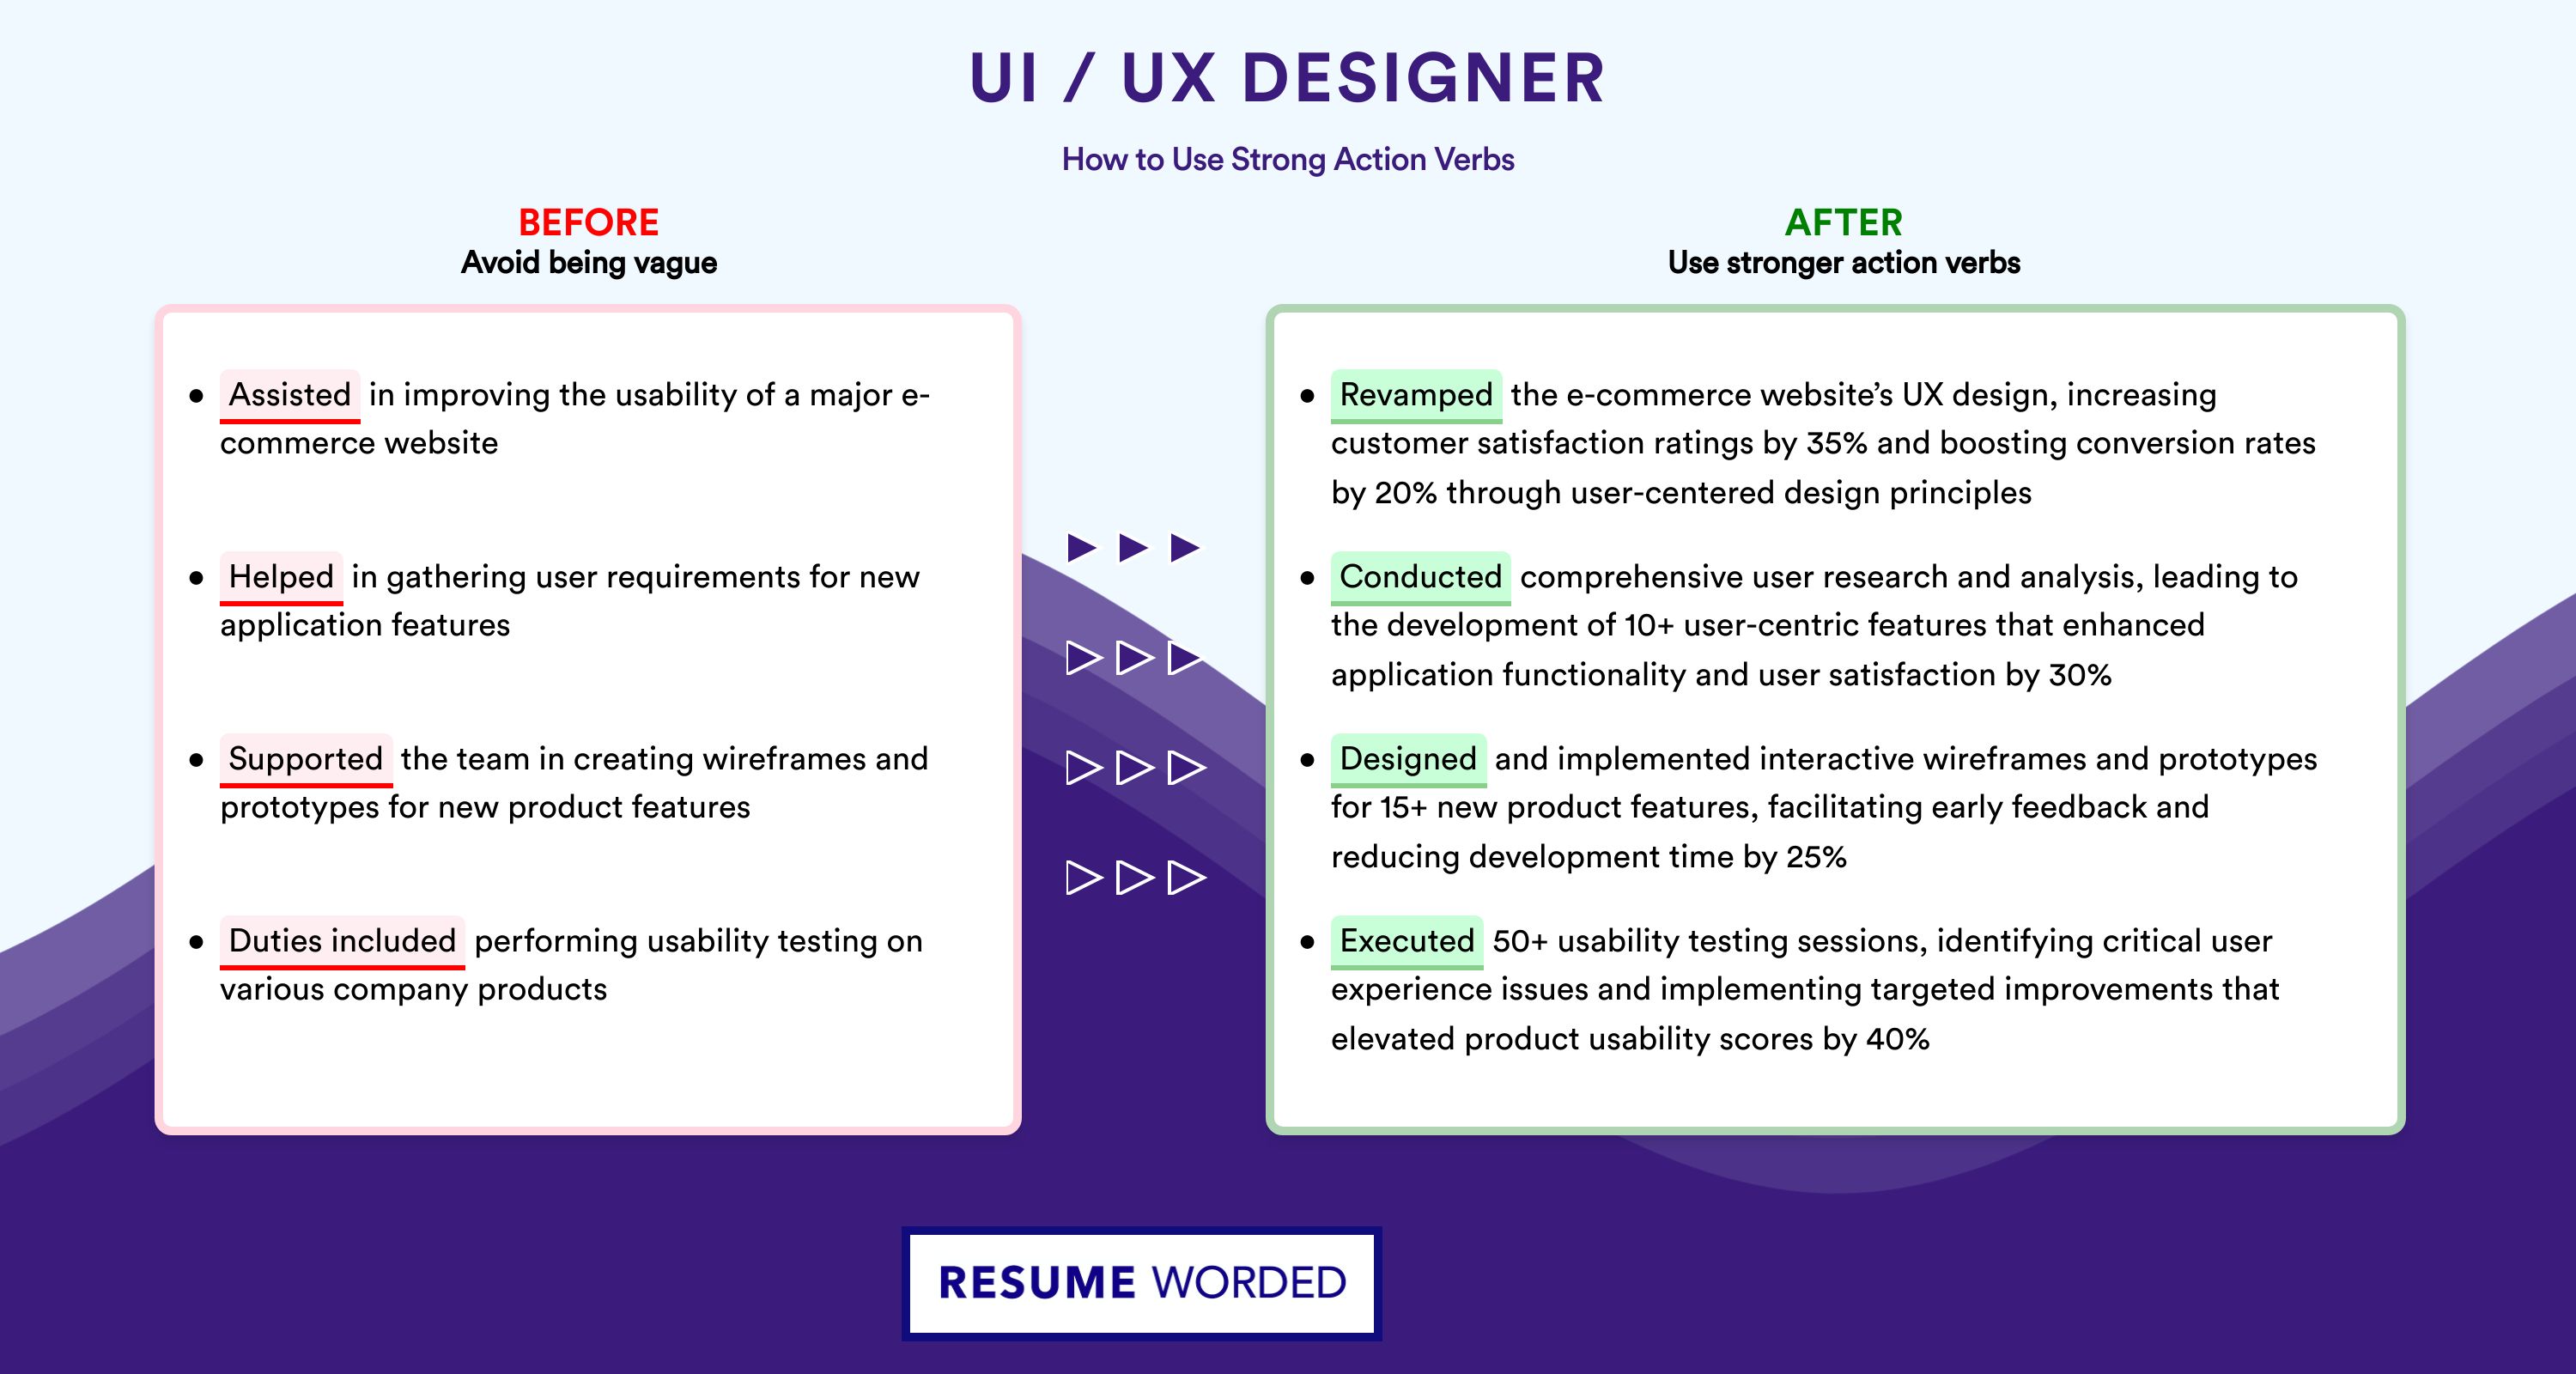 Action Verbs for UI / UX Designer